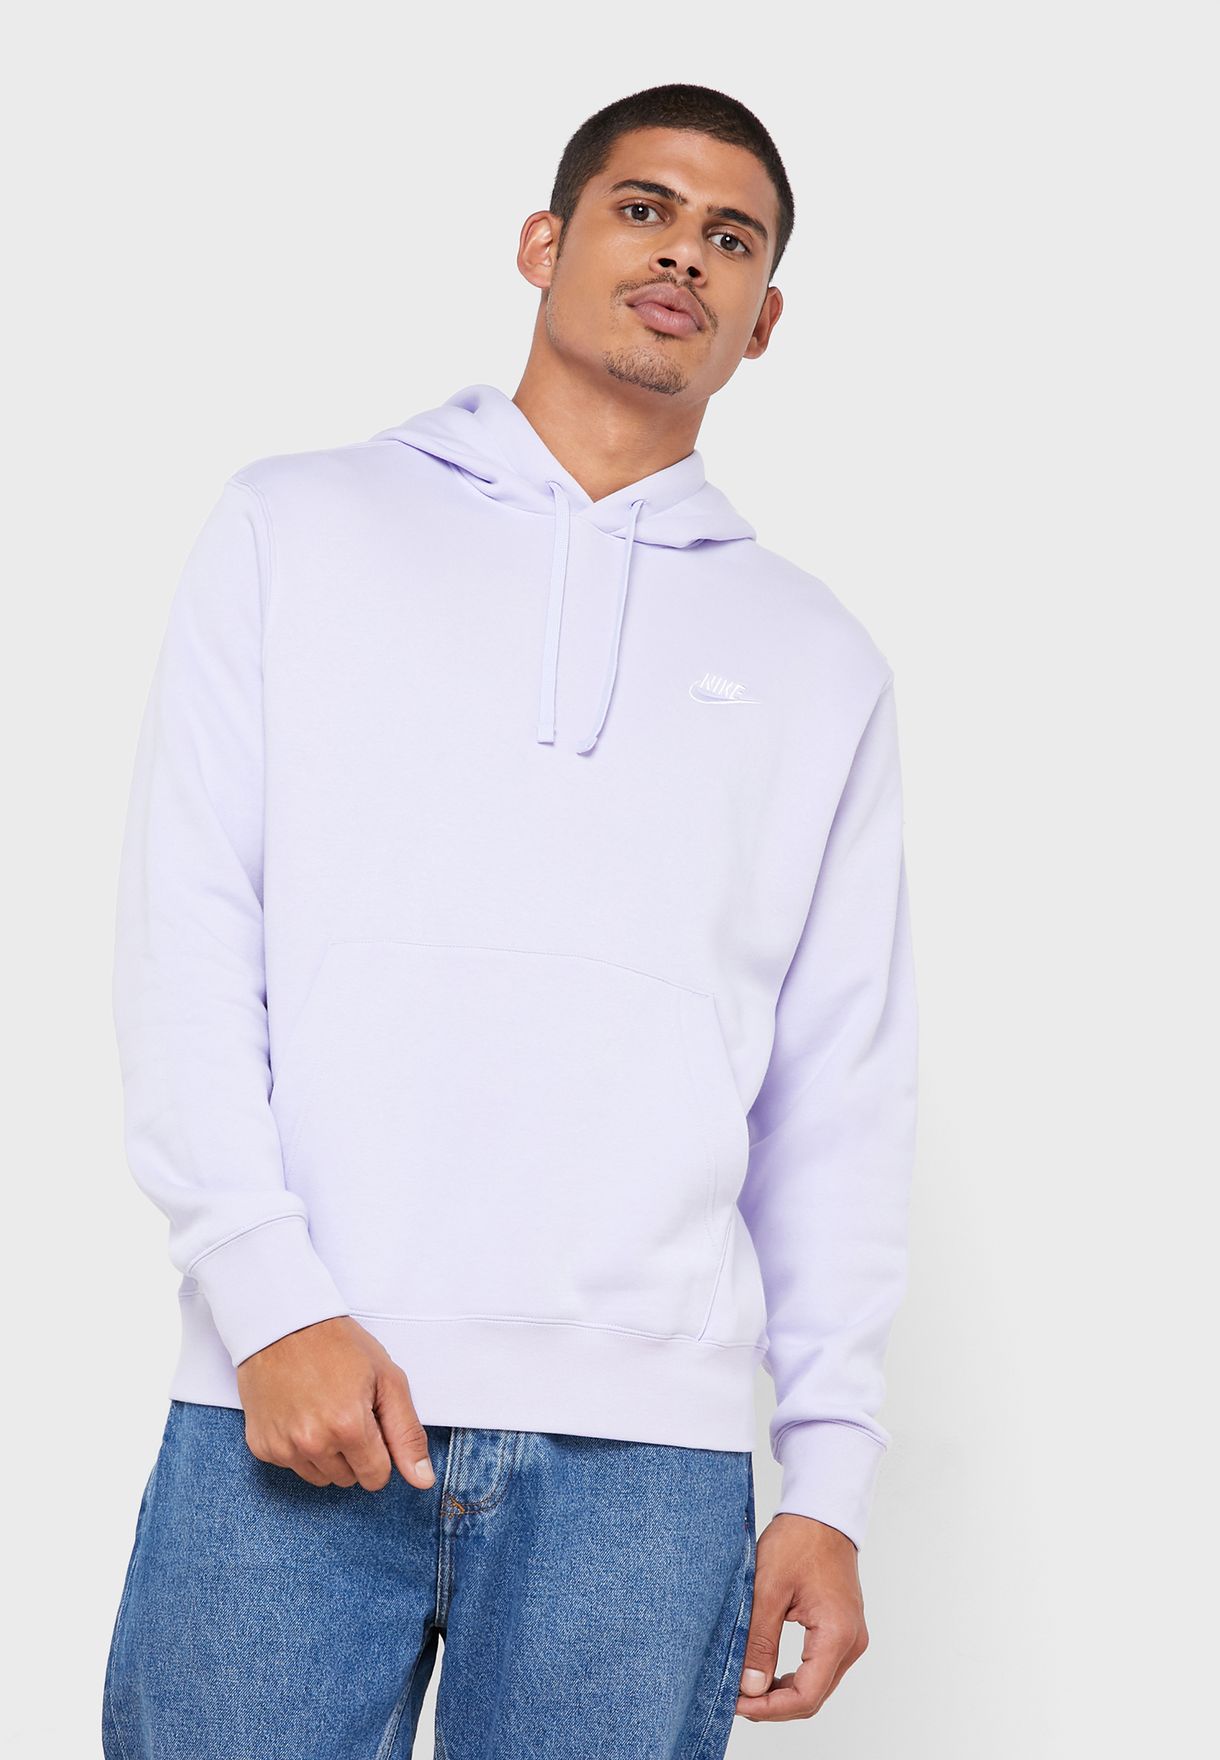 light purple nike sweatshirt